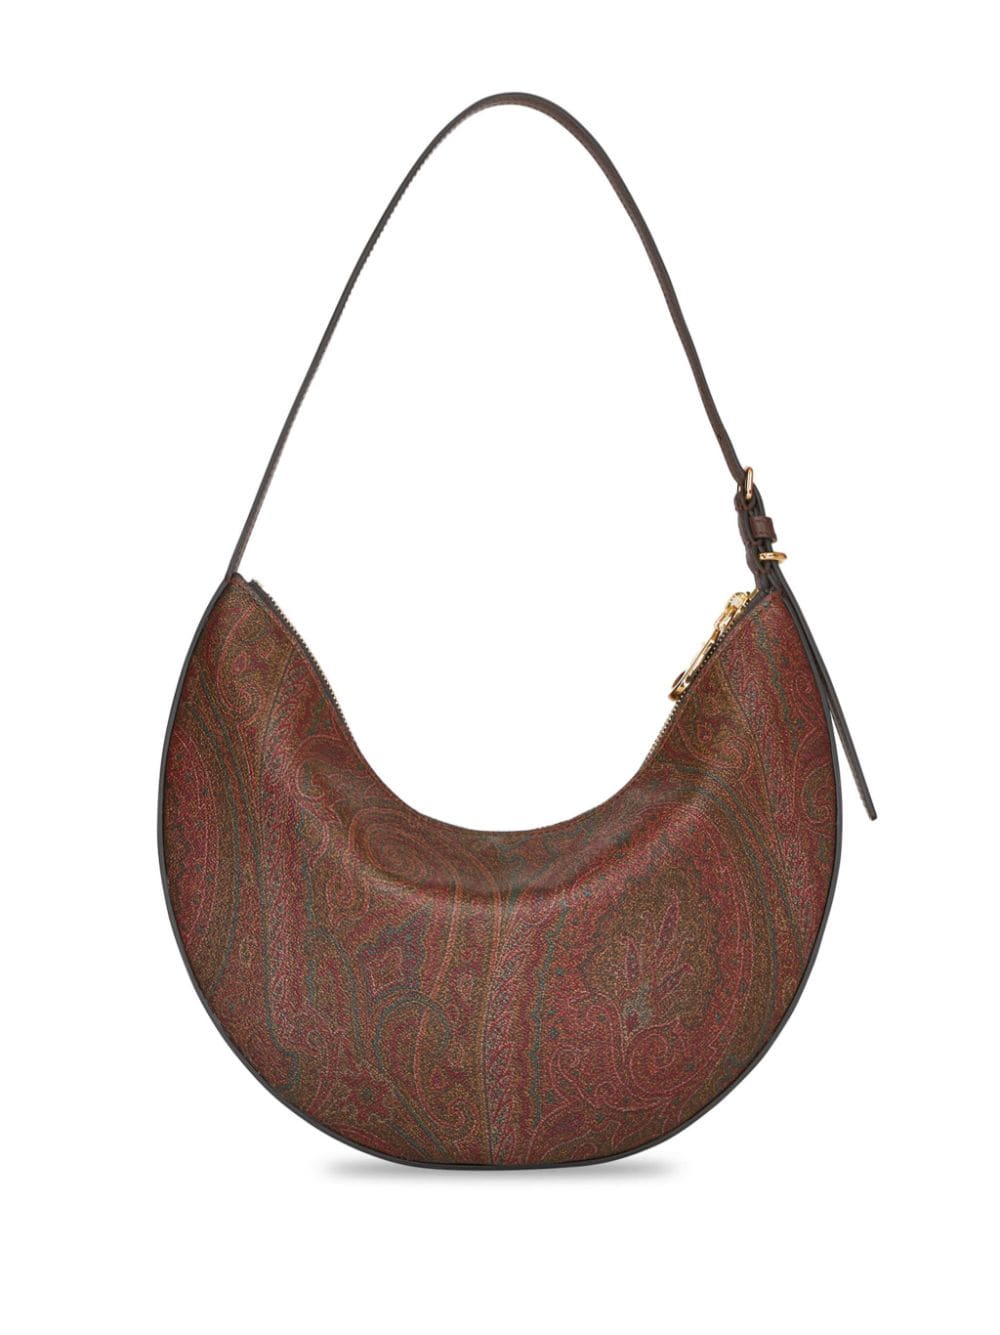 ETRO Paisley Print Leather Medium Shoulder Handbag in Brown